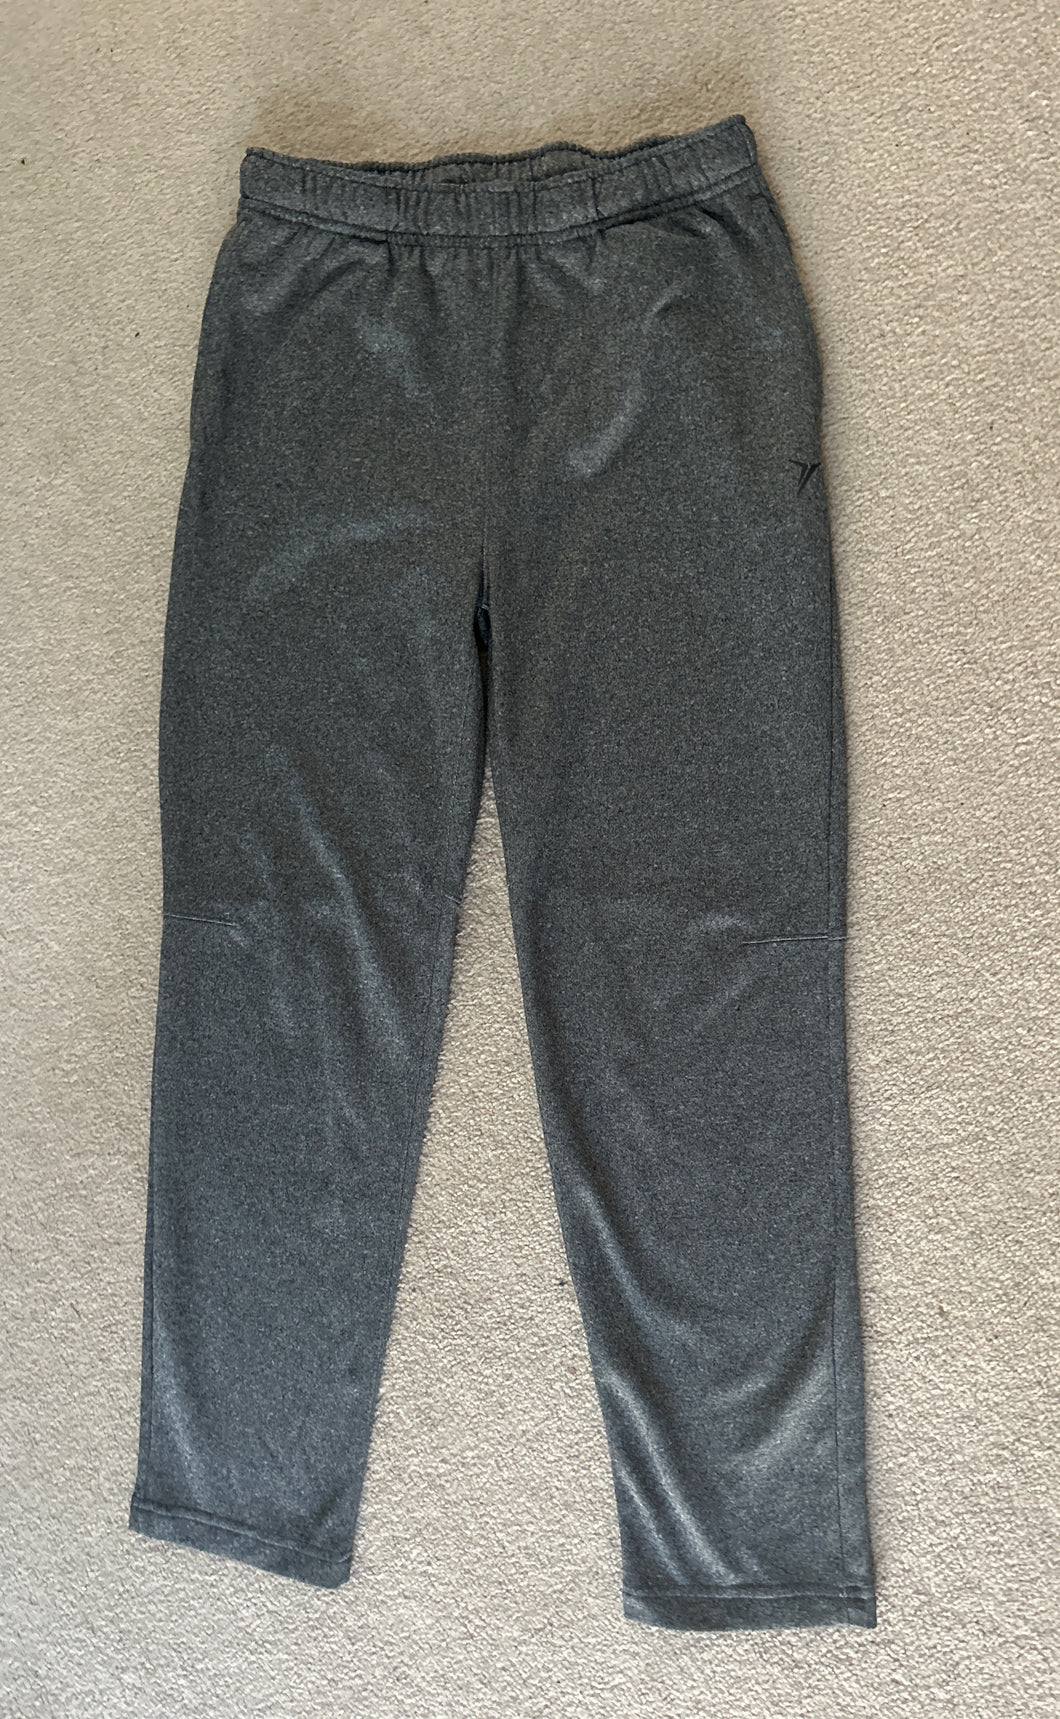 Old Navy gray gym pants XL